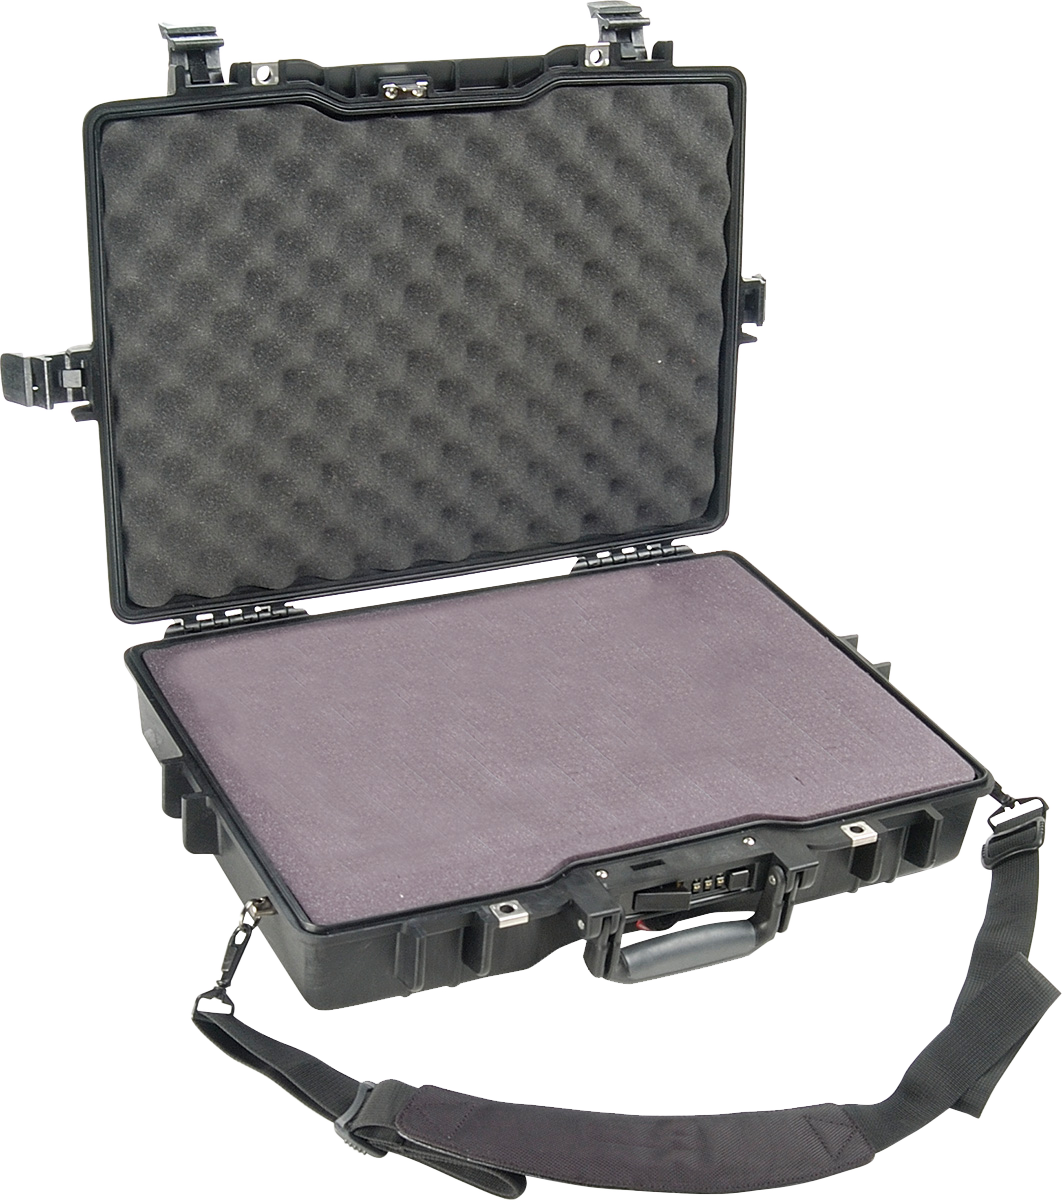 Pelican 1495 Protector Laptop Case